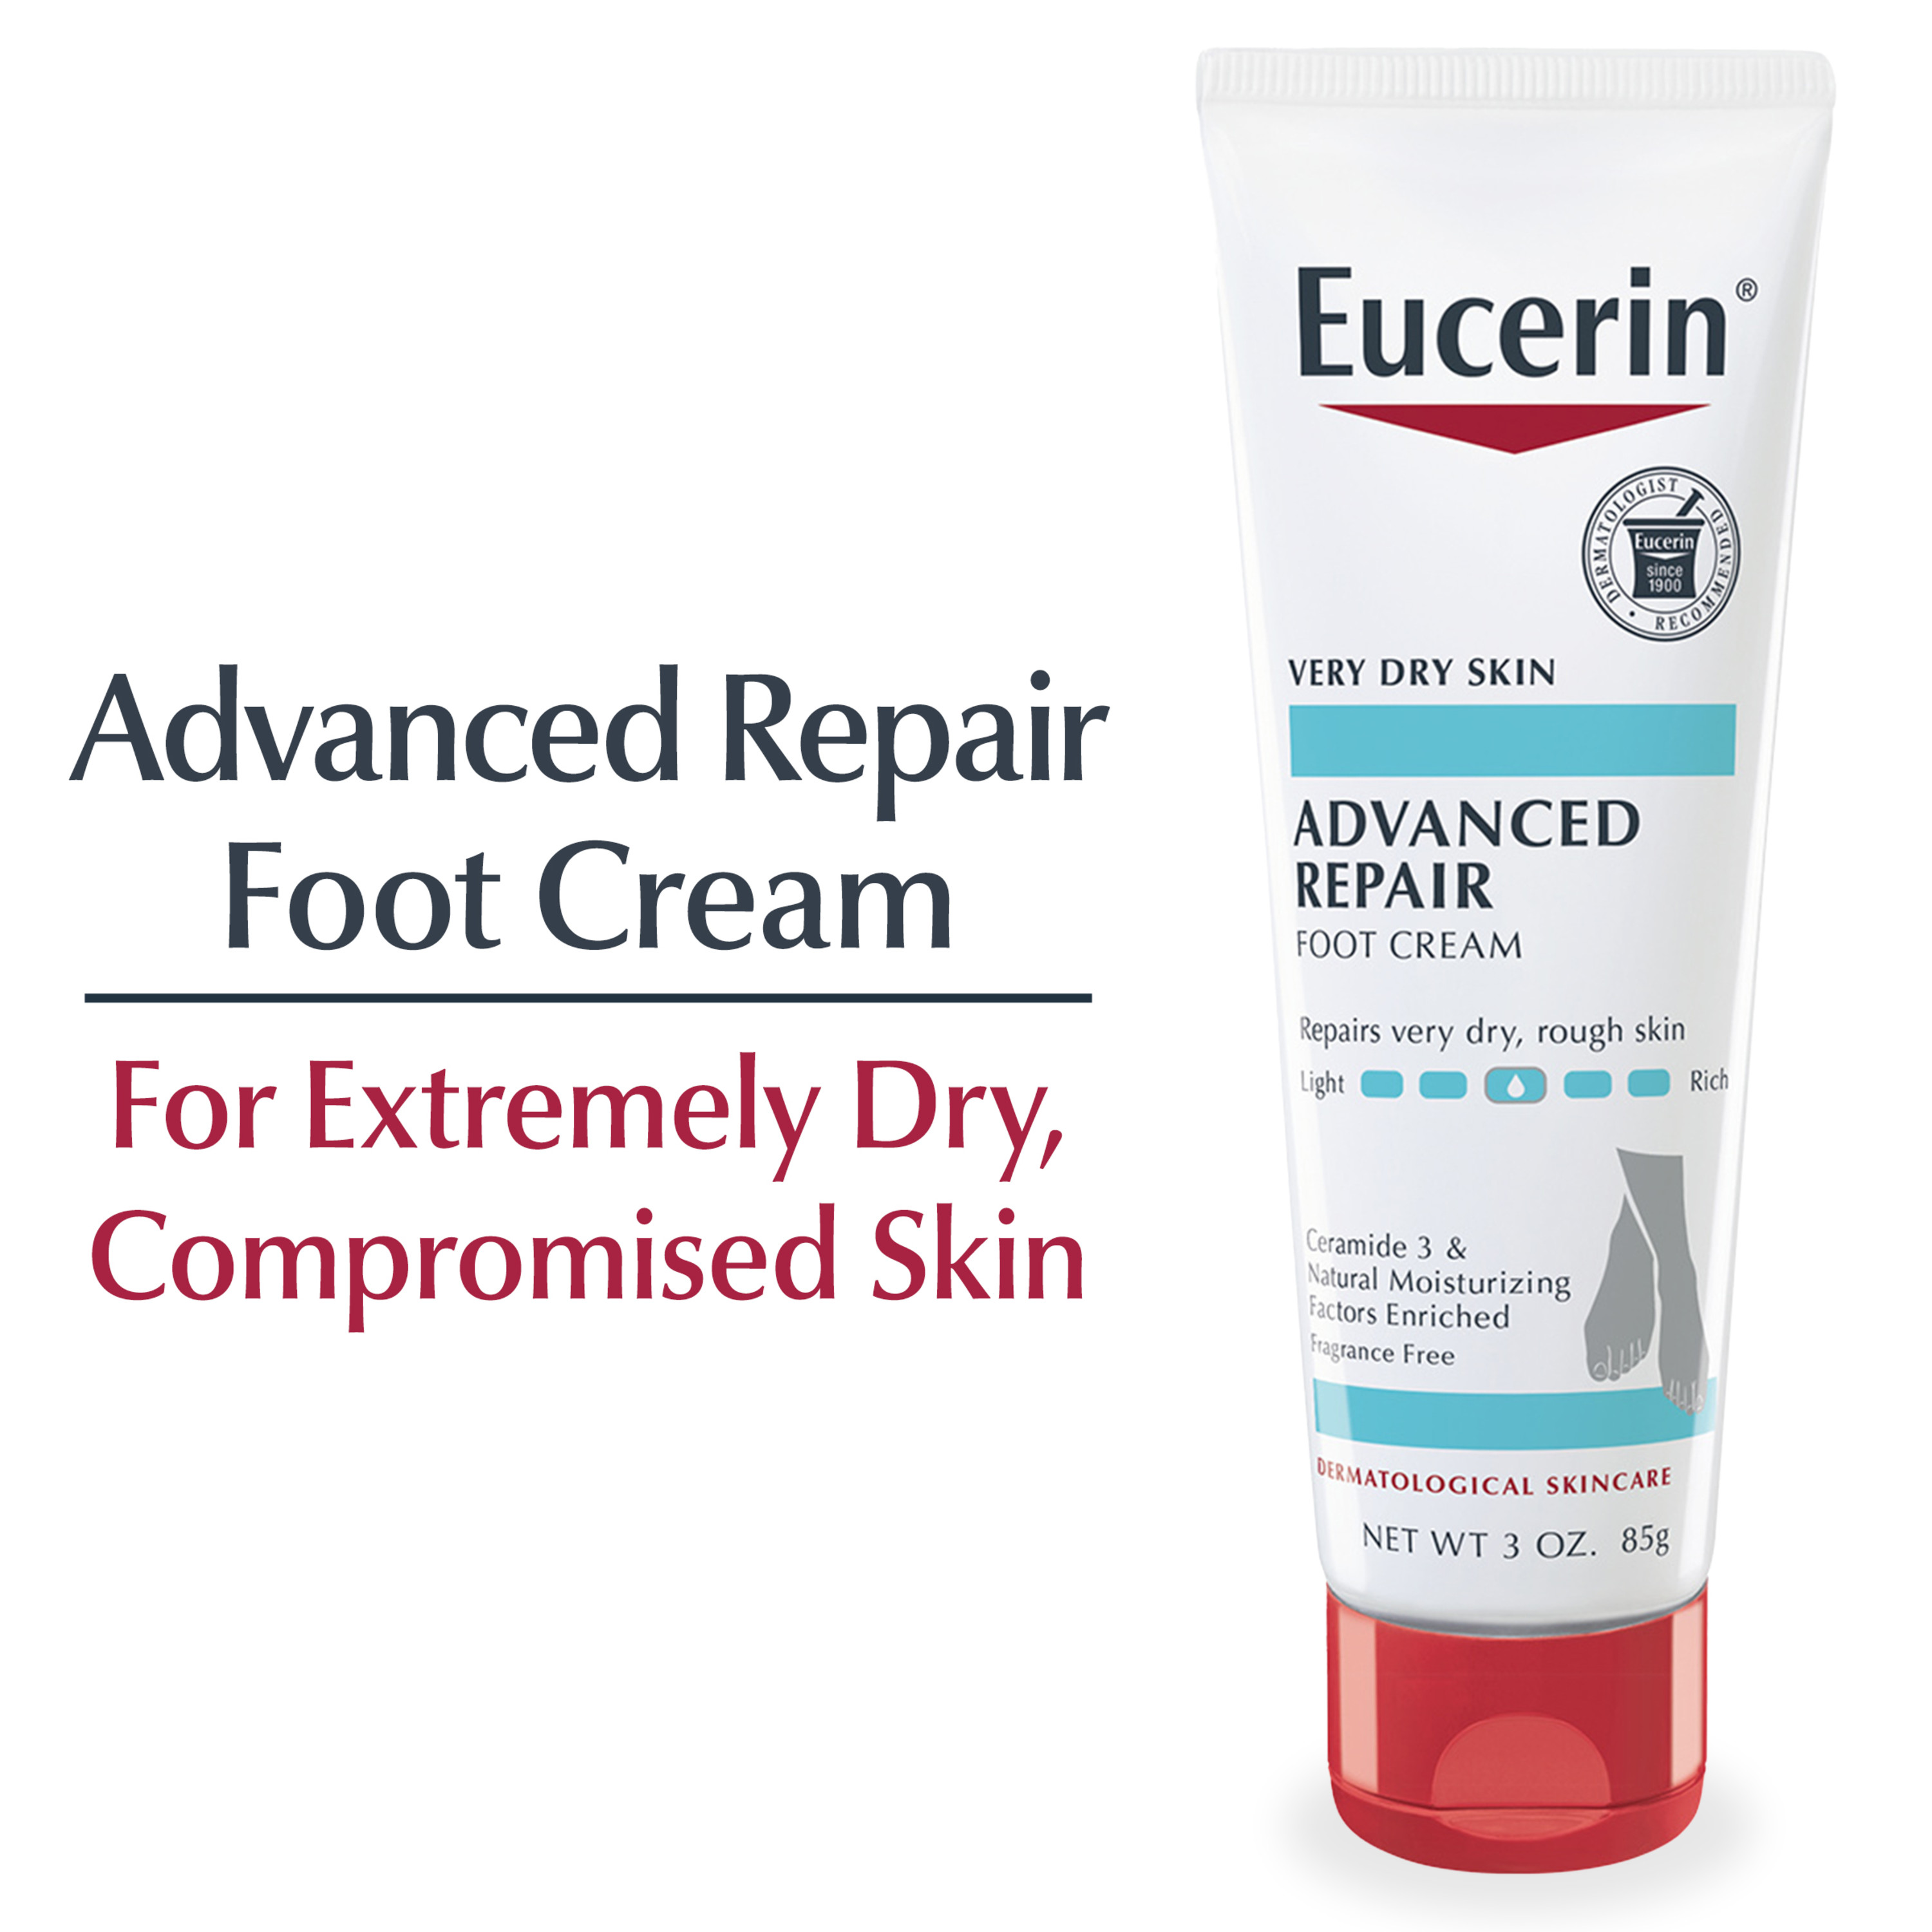 Eucerin Advanced Repair Foot Cream for Dry Feet, 3 Oz Tube - image 1 of 15